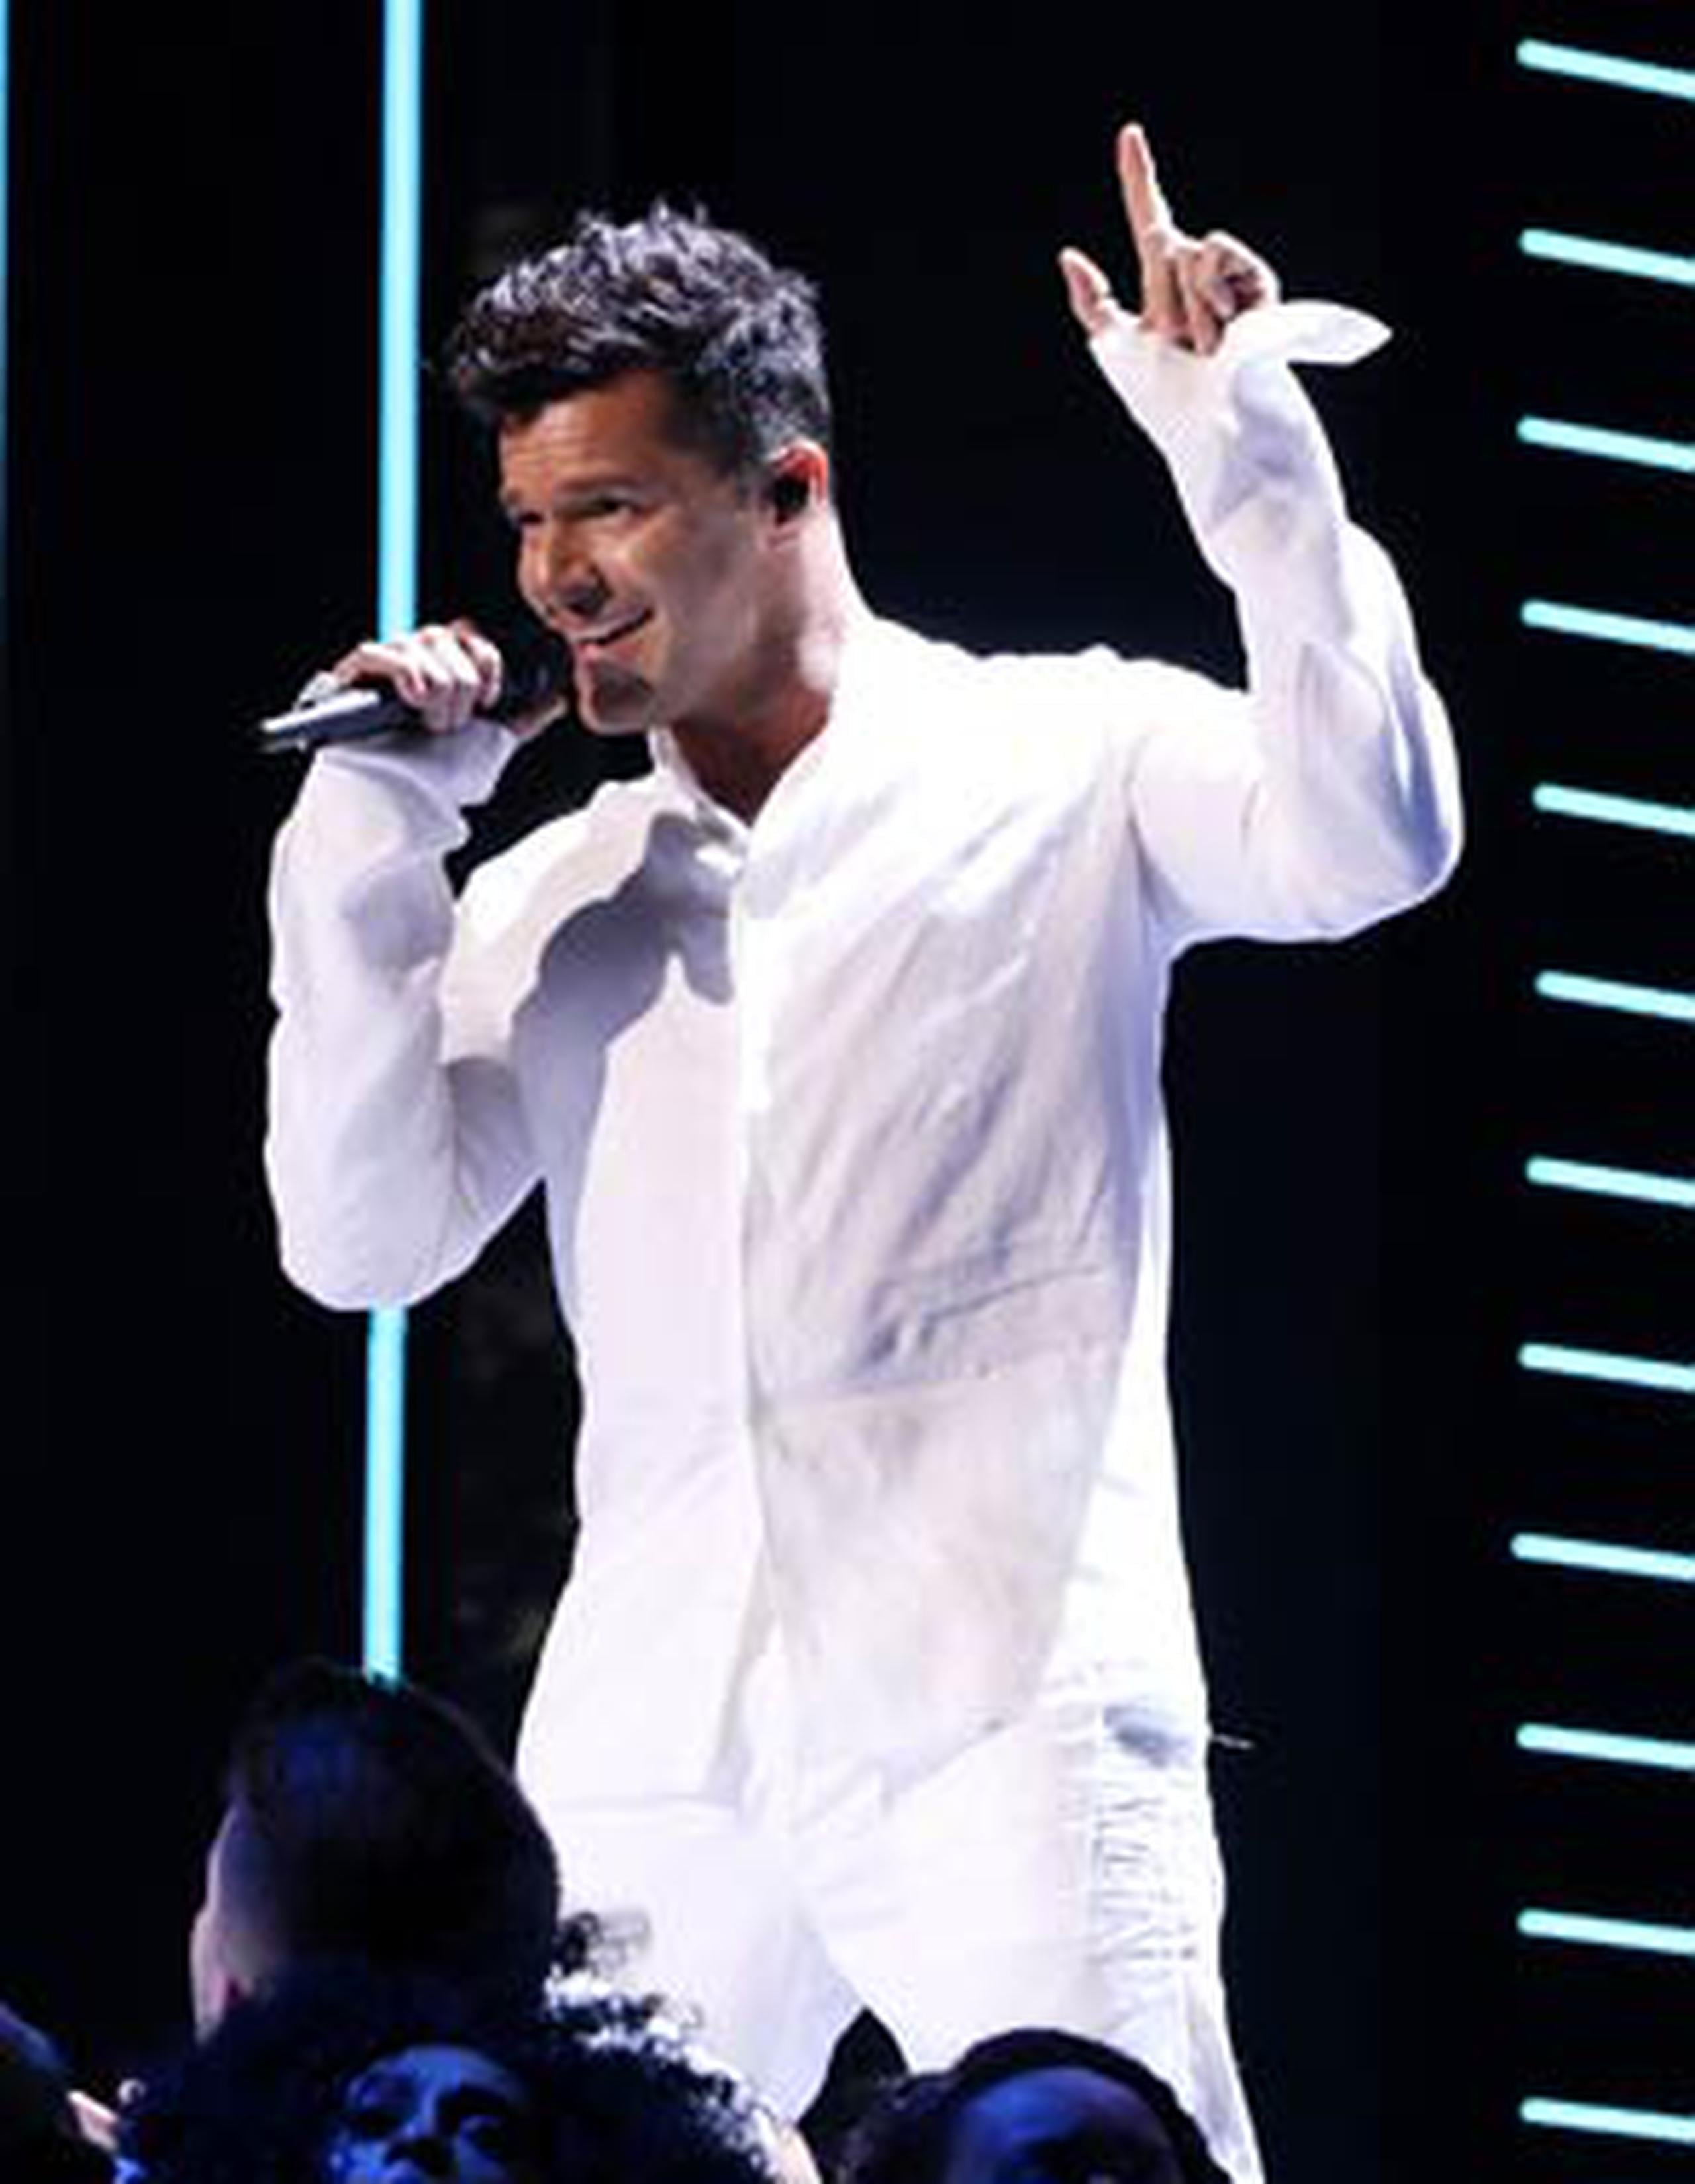 Ricky Martin interpretó "Vente pa' ca". (Suministrada/Univision)